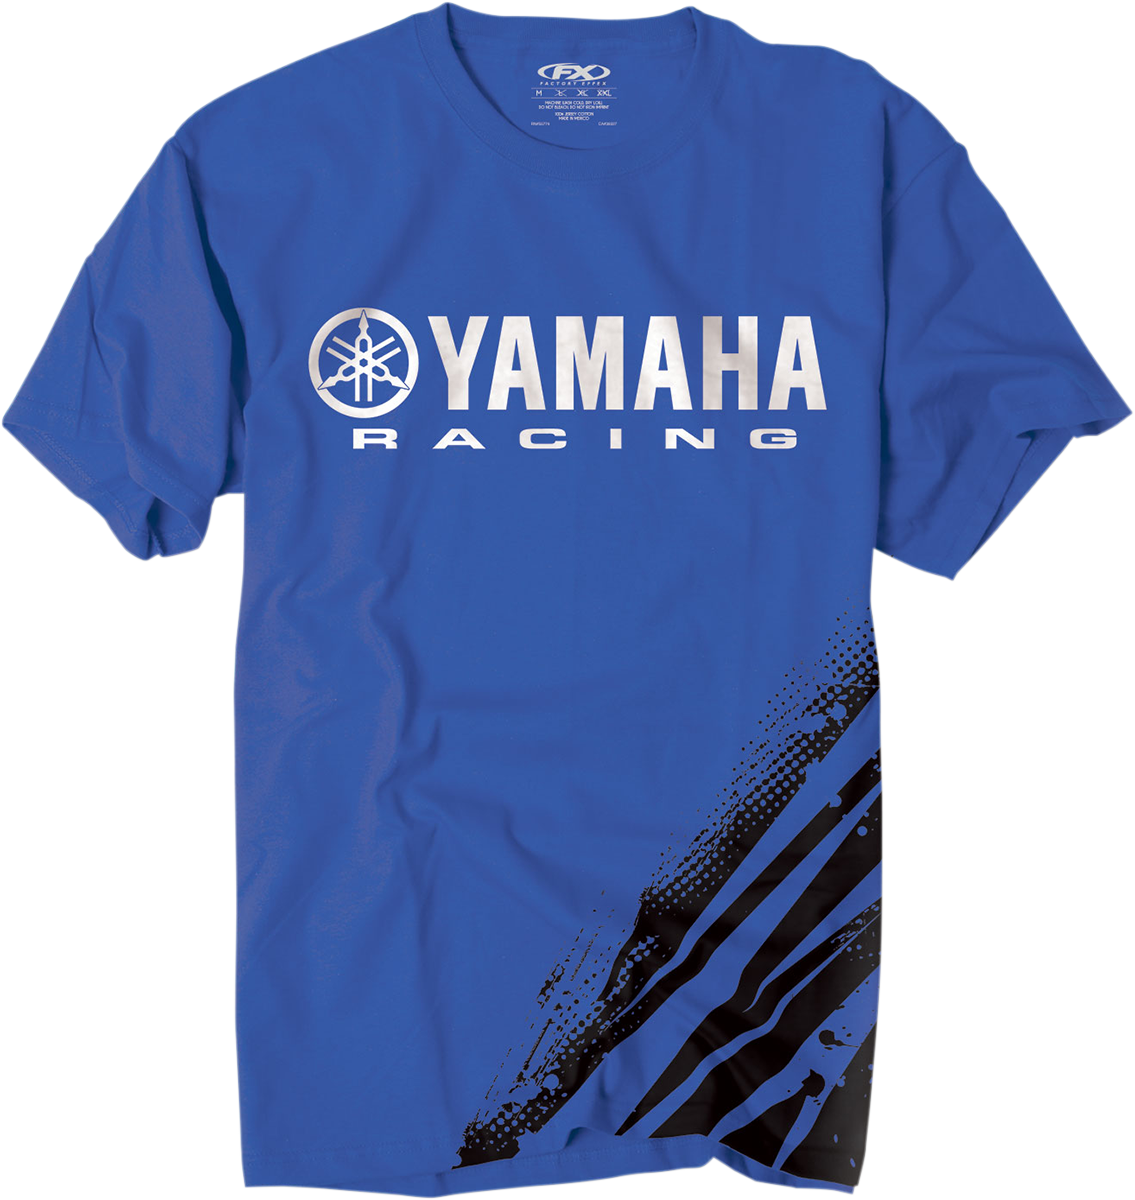 FACTORY EFFEX Yamaha Racing Flare T-Shirt - Blue - Medium 14-88180